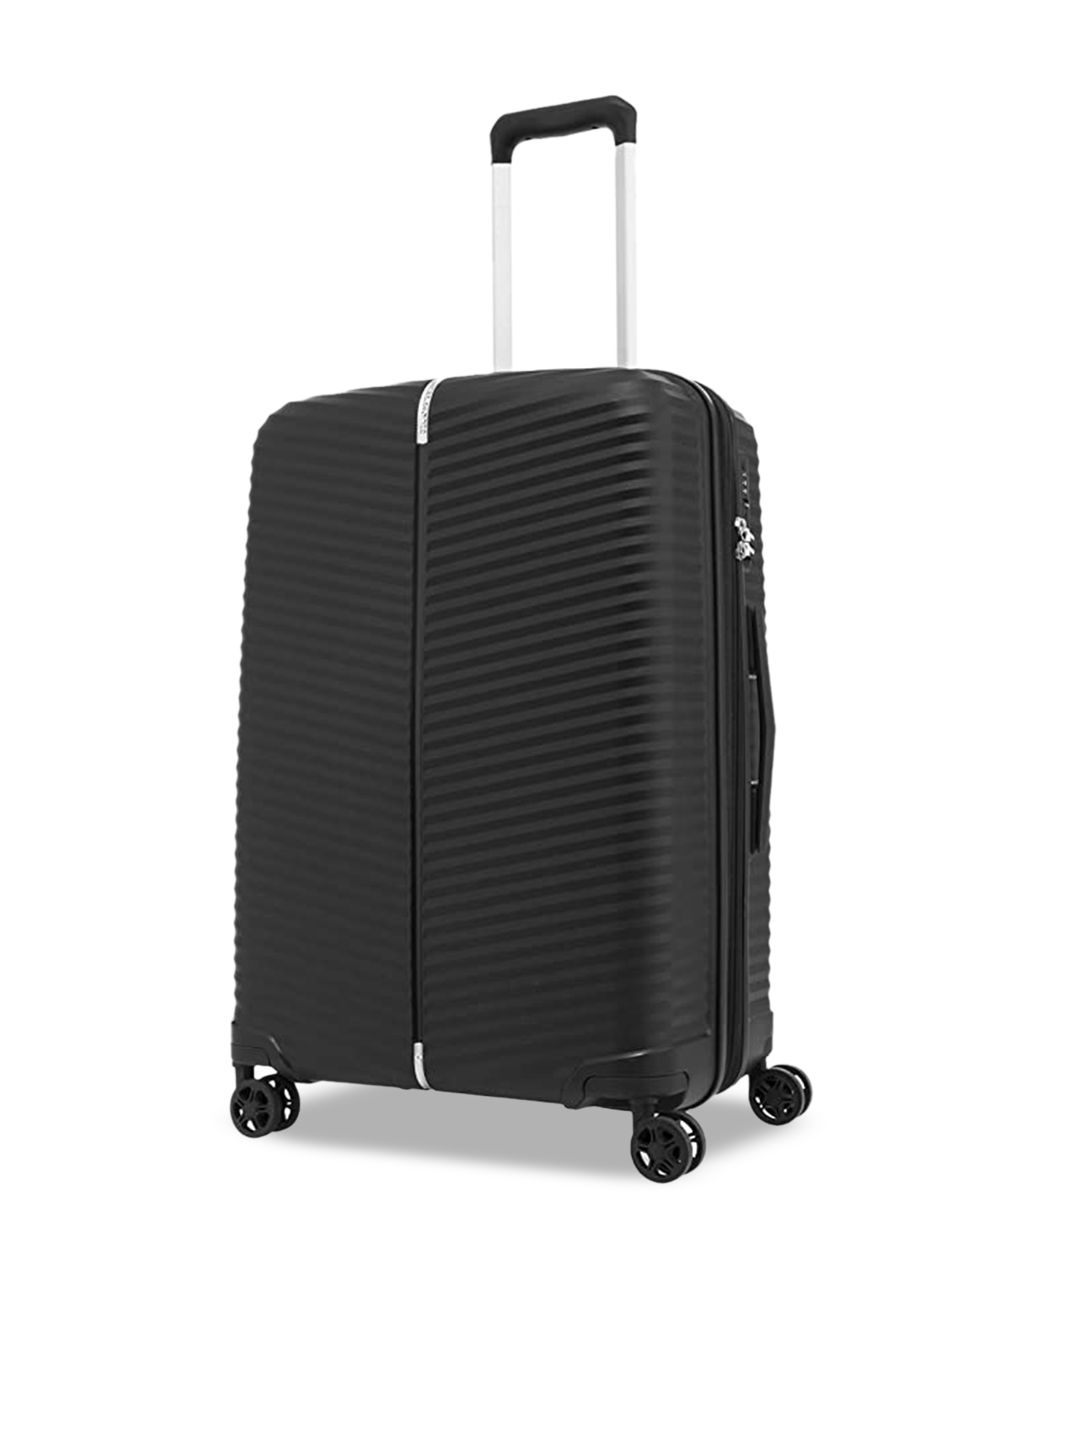 Samsonite Black Solid Hard-Sided Medium Trolley Suitcase Price in India